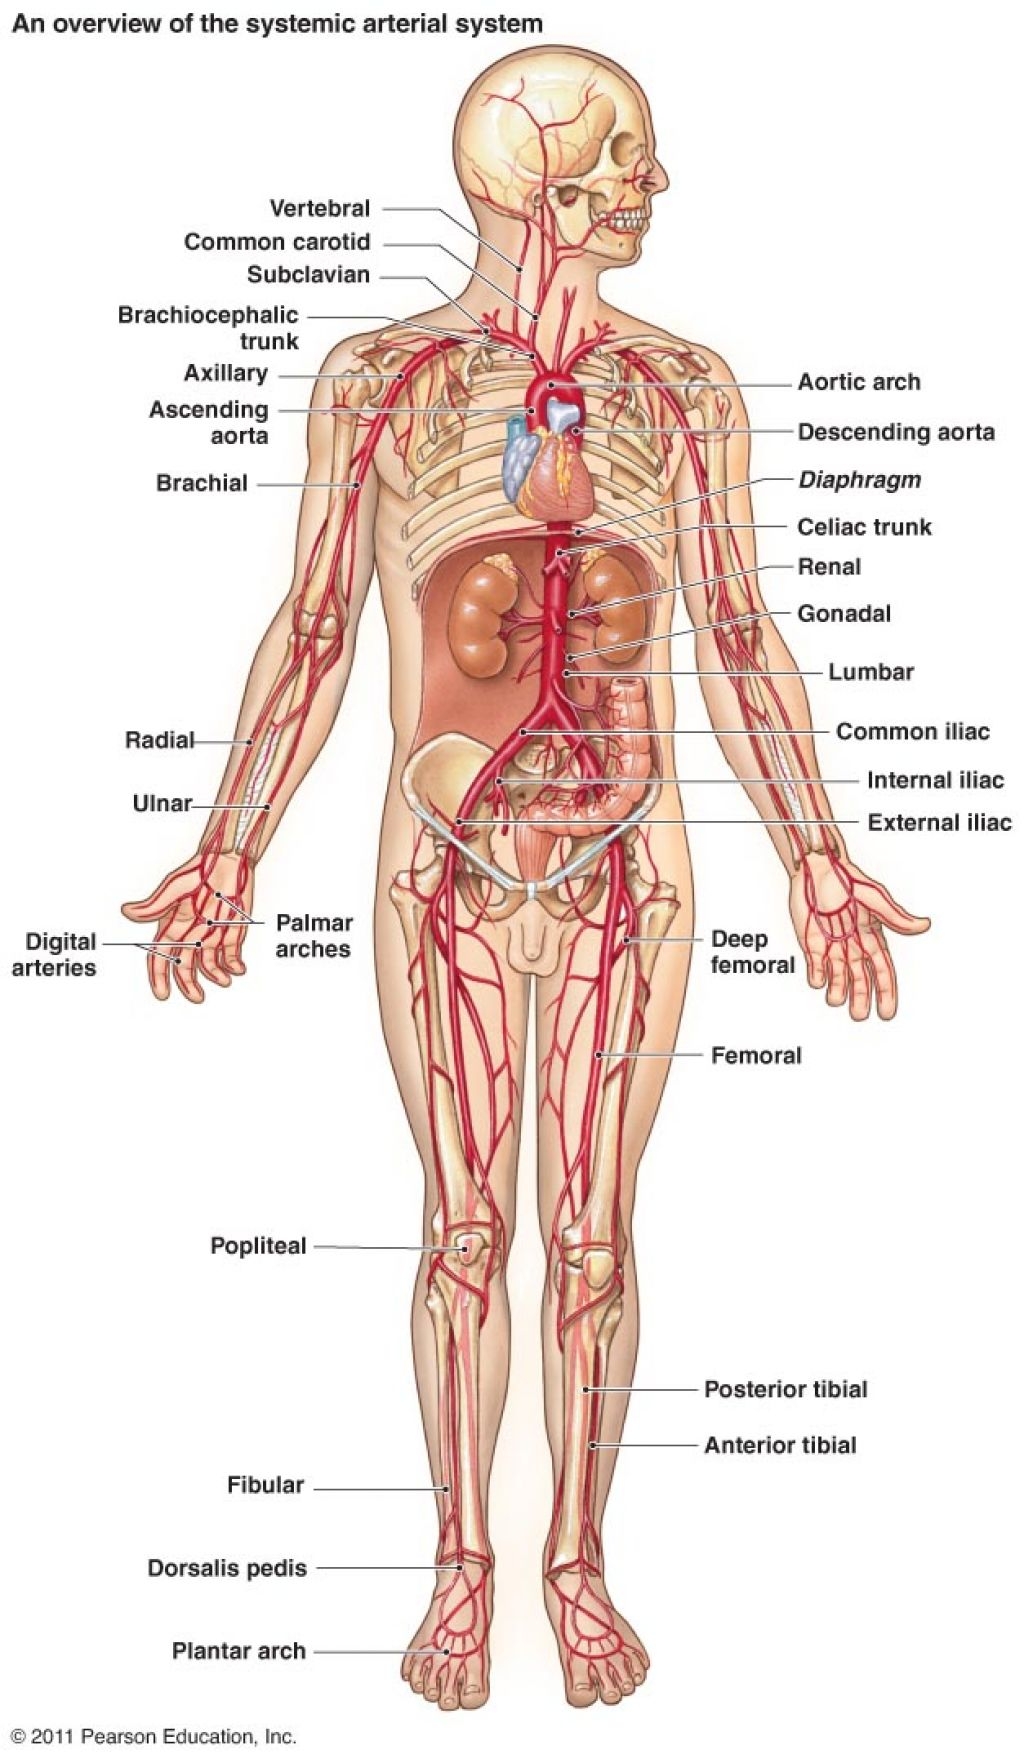 anatomical-map-of-human-body-body-map-of-veins-and-arteries-human-anatomy-diagram.jpg